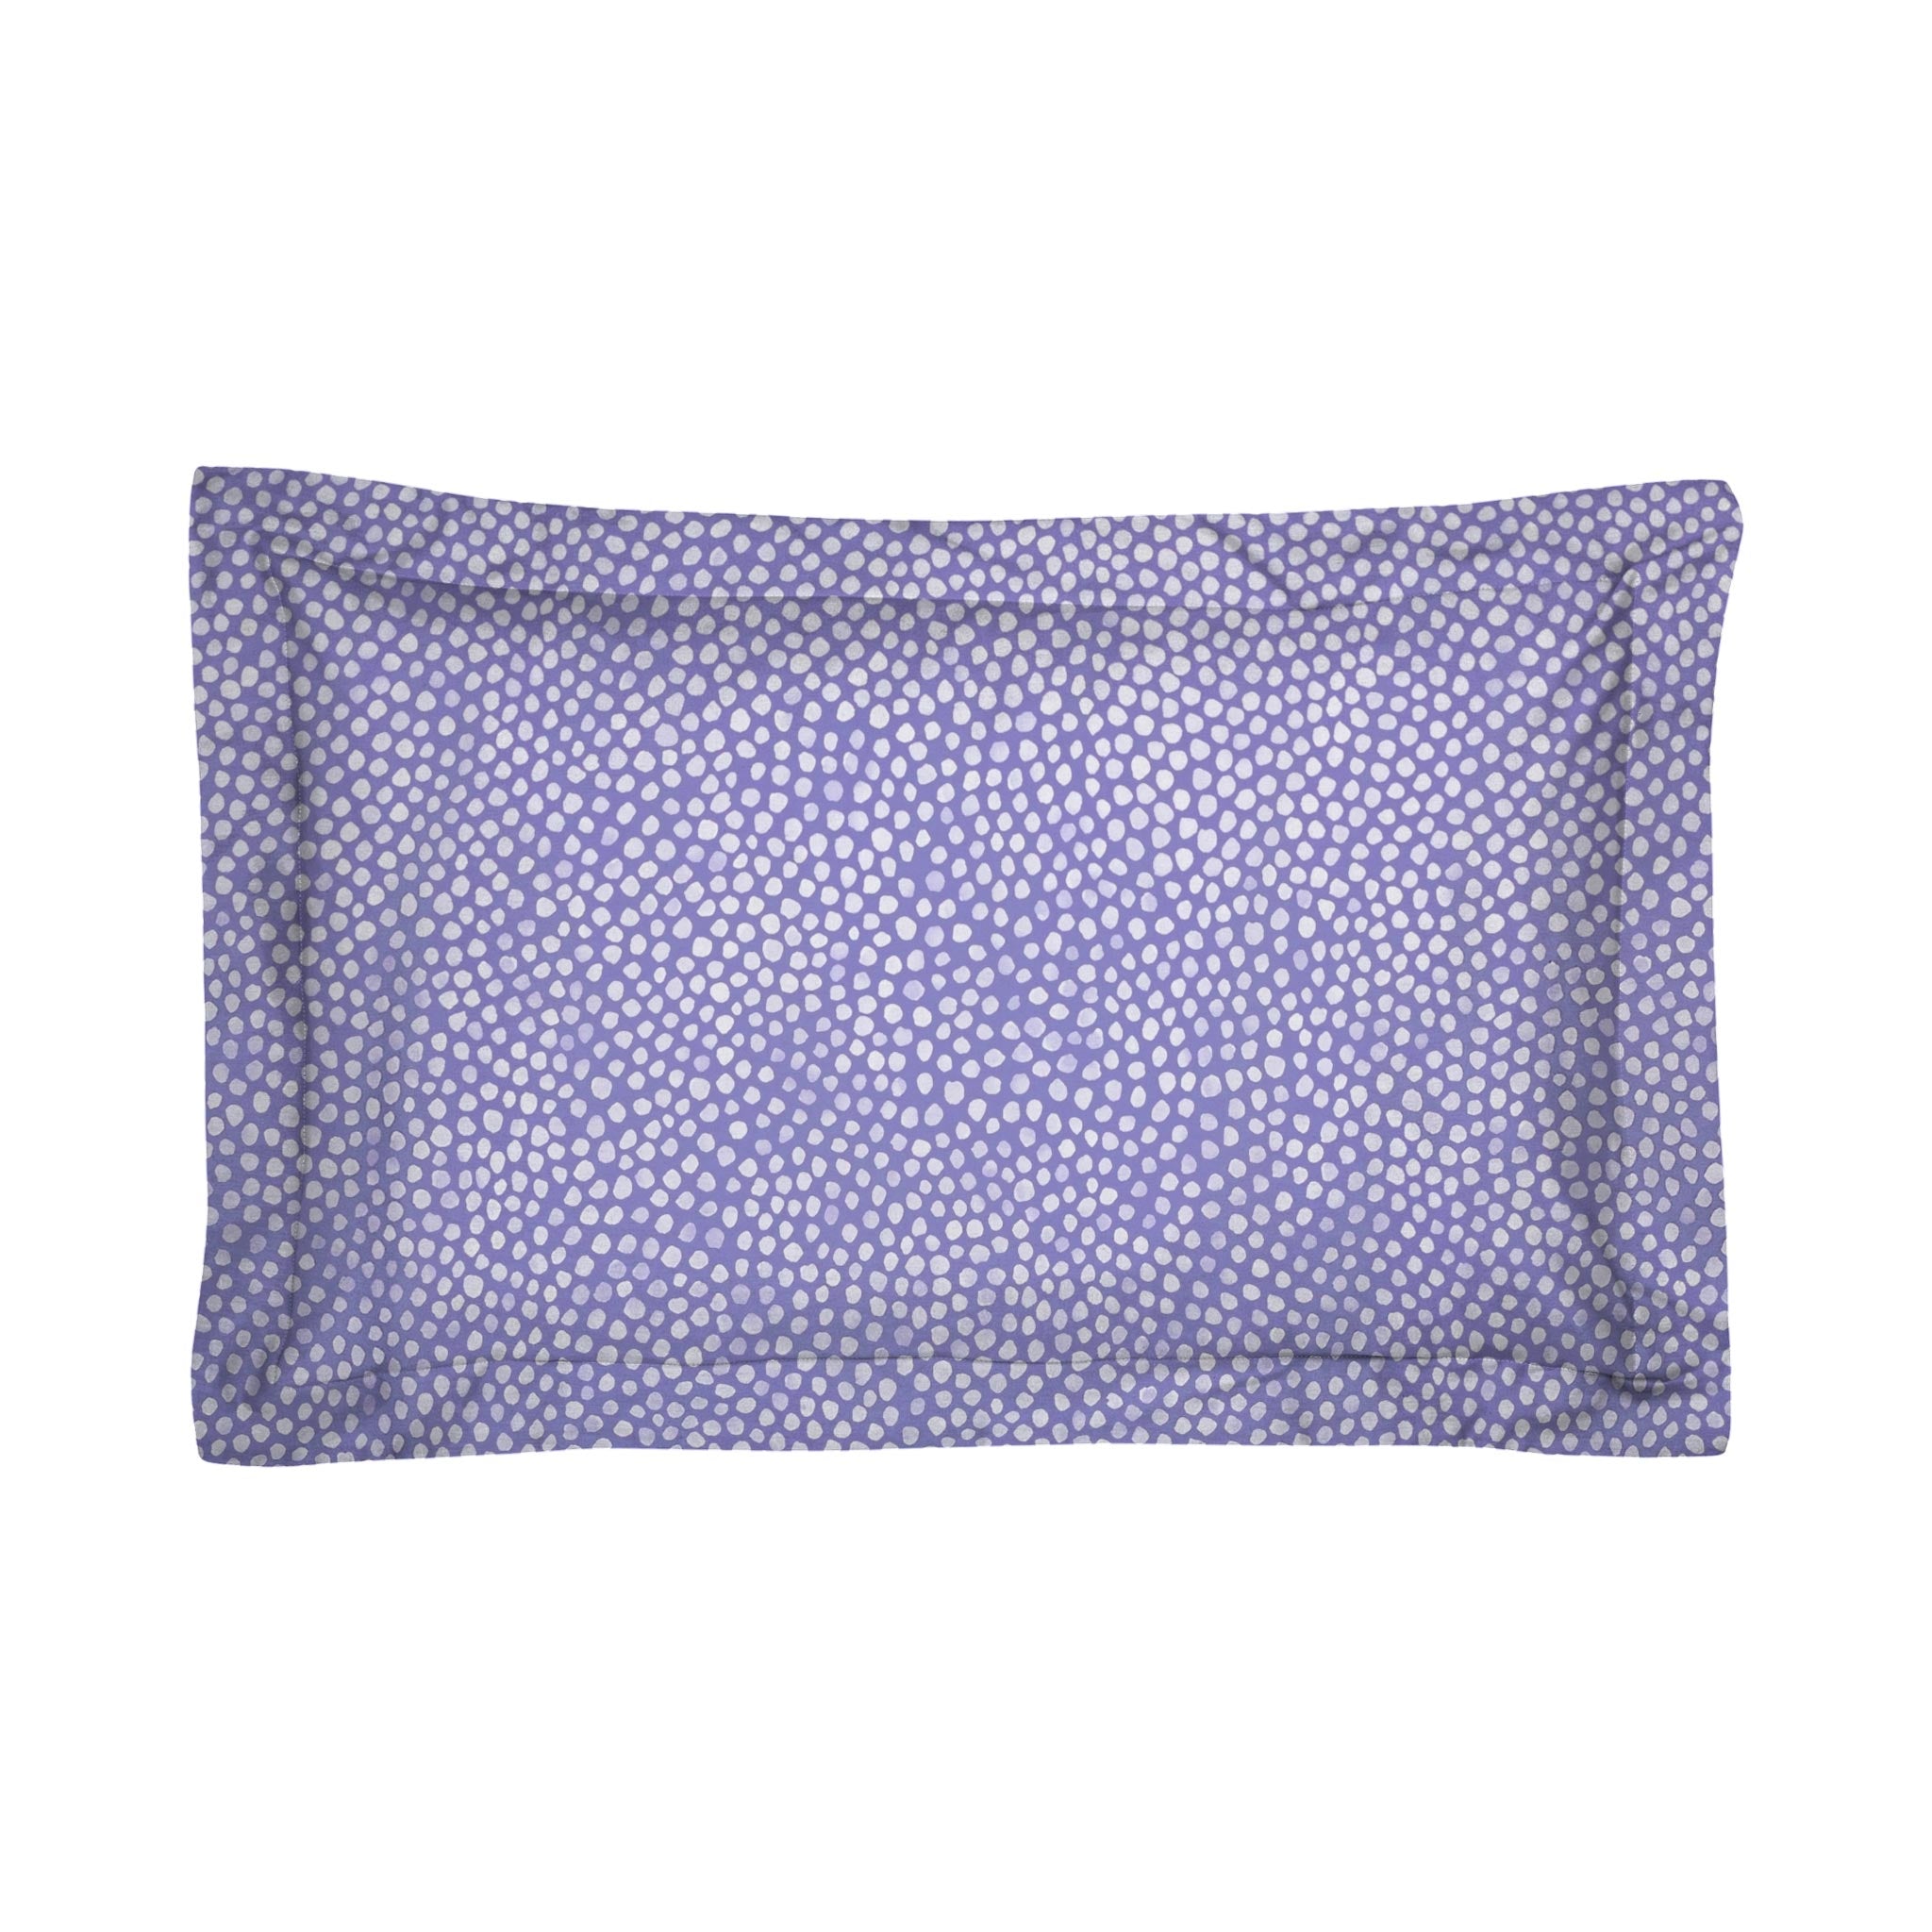 Purple Polka Dot 100% Cotton Percale 200TC Oxford Pillowcase